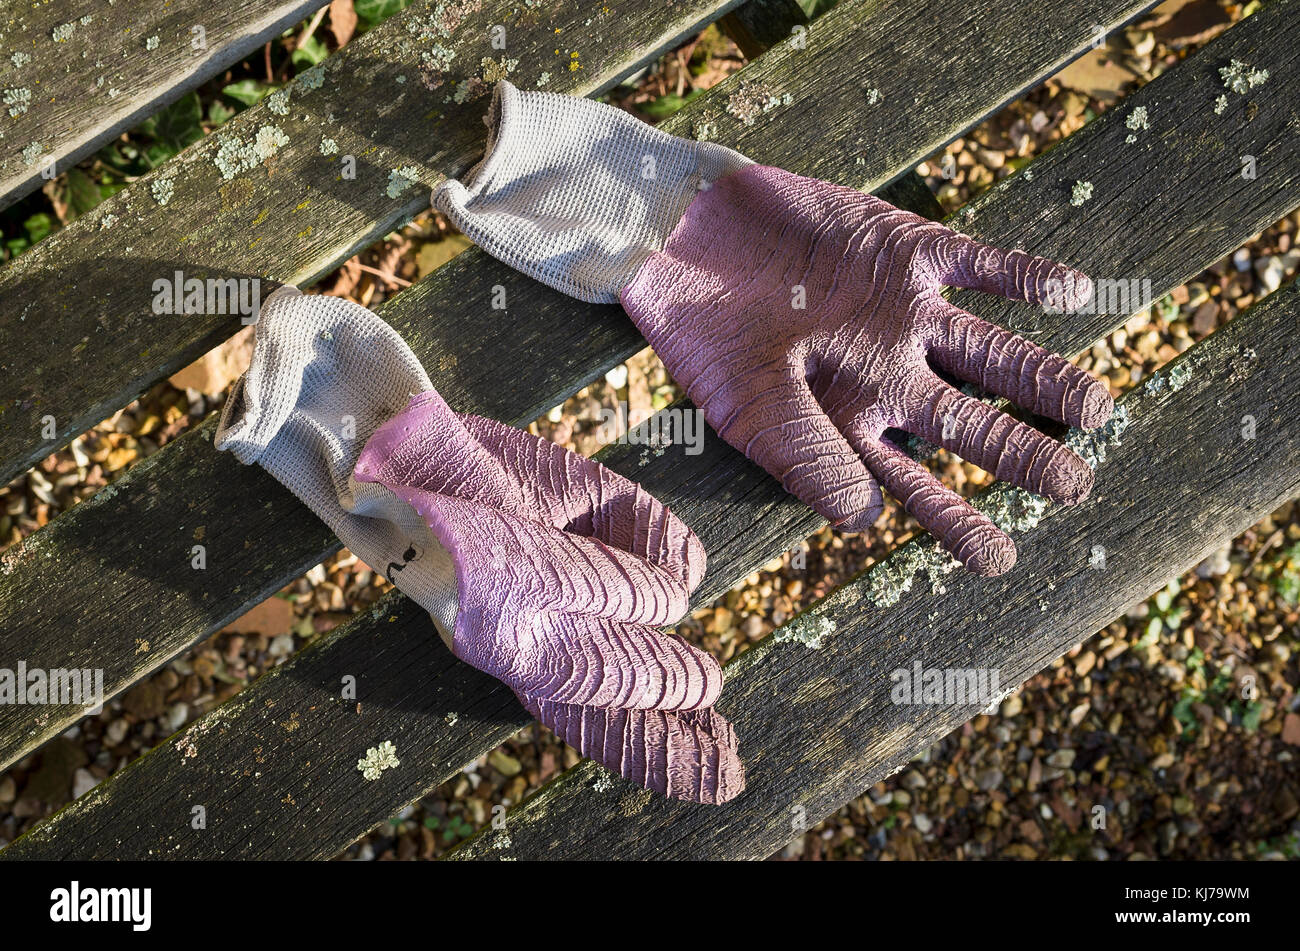 The gardener has forgotten her gloves which lie on a wooden seat in the garden Stock Photo